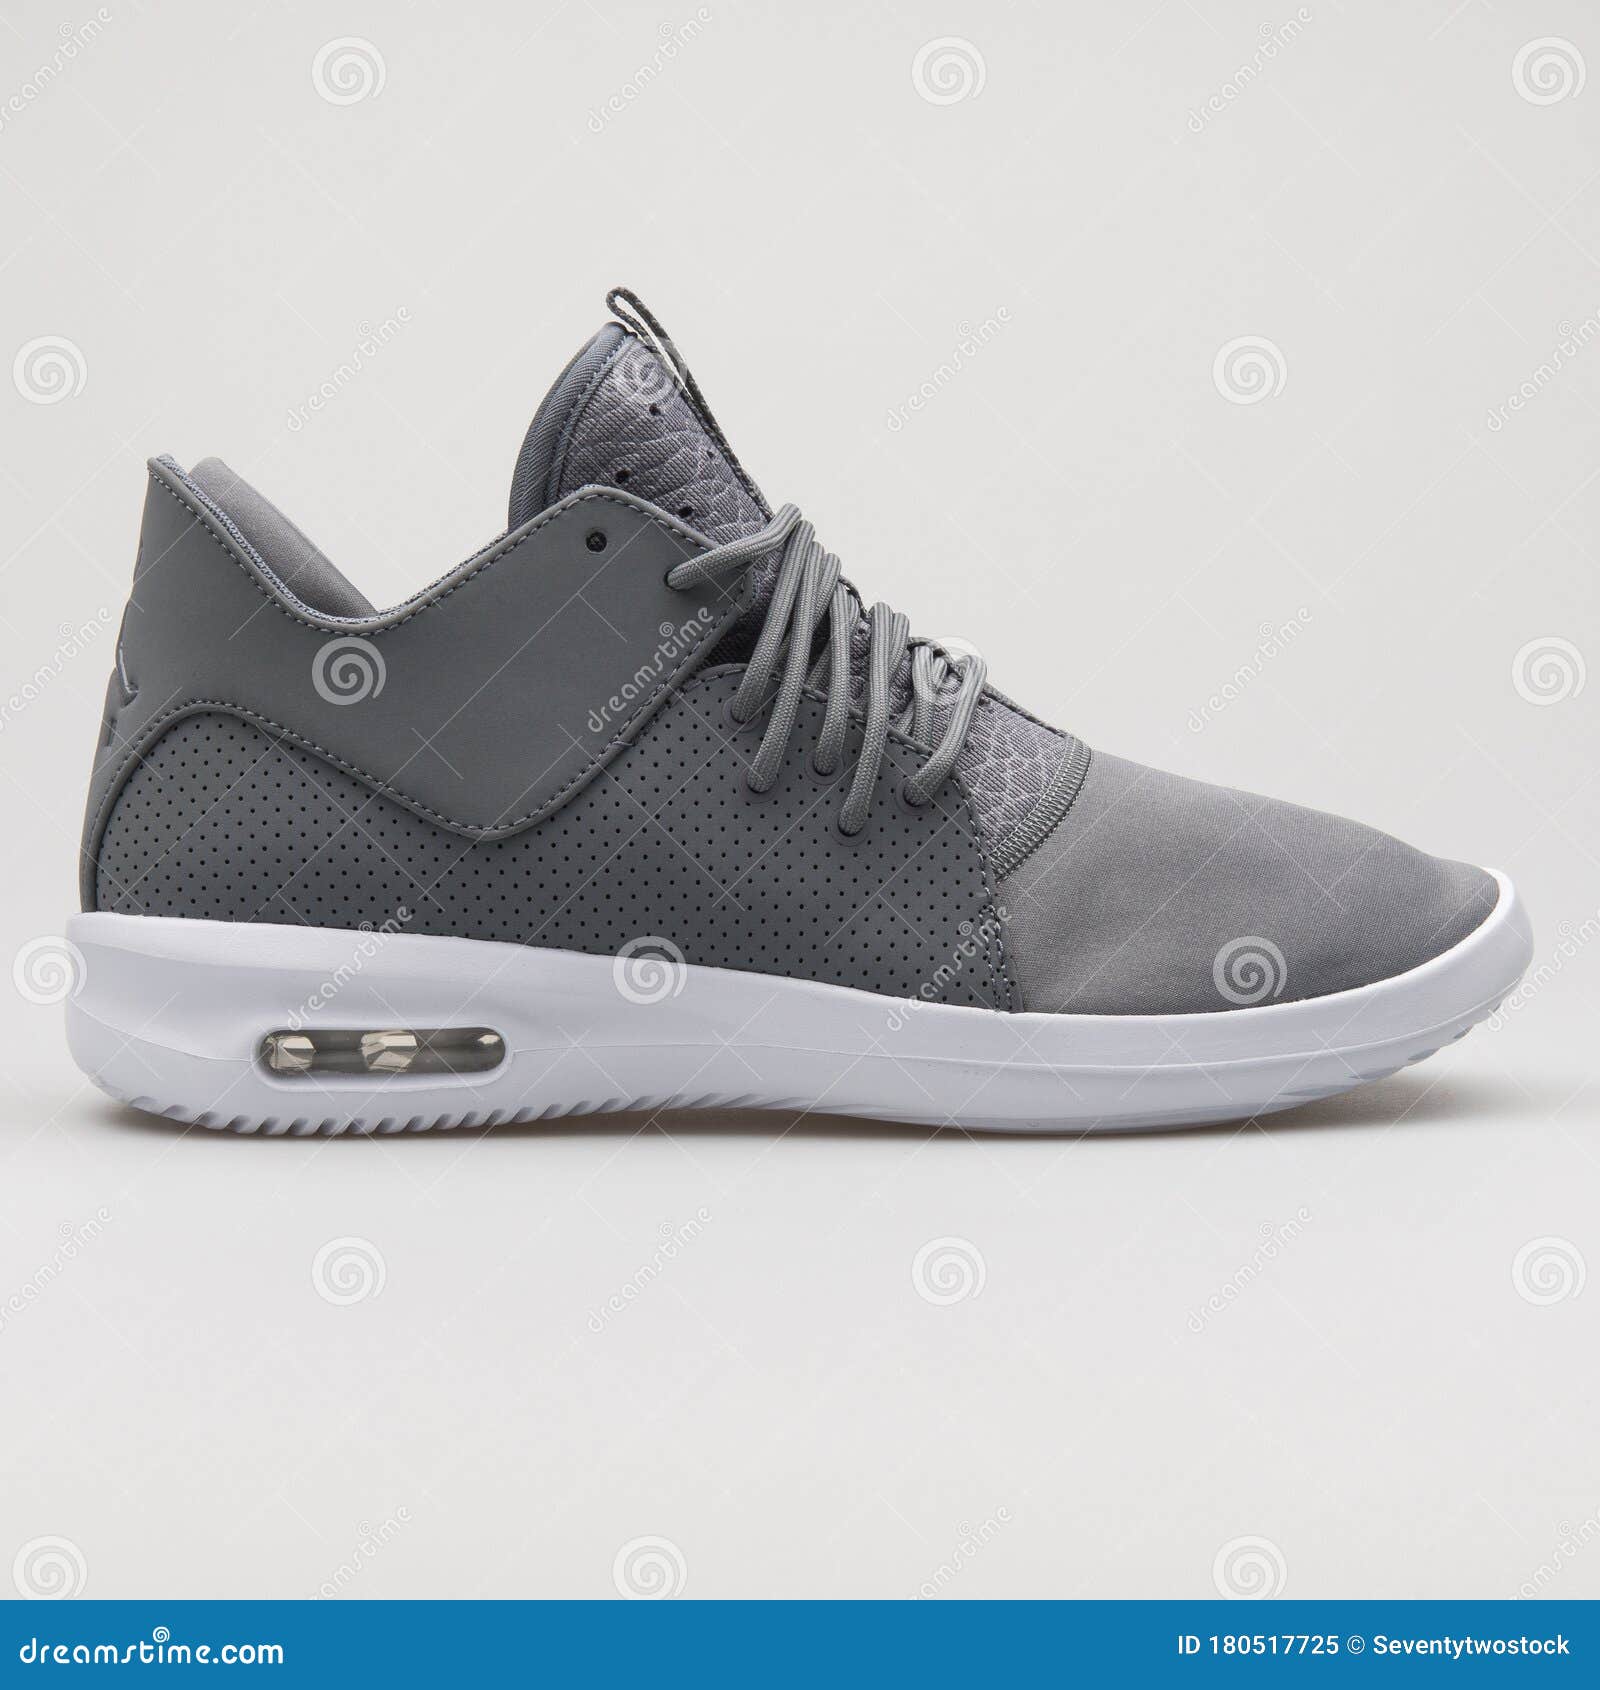 Peregrino Senador obtener Nike Air Jordan First Class Grey and White Sneaker Editorial Image - Image  of sneaker, accessories: 180517725